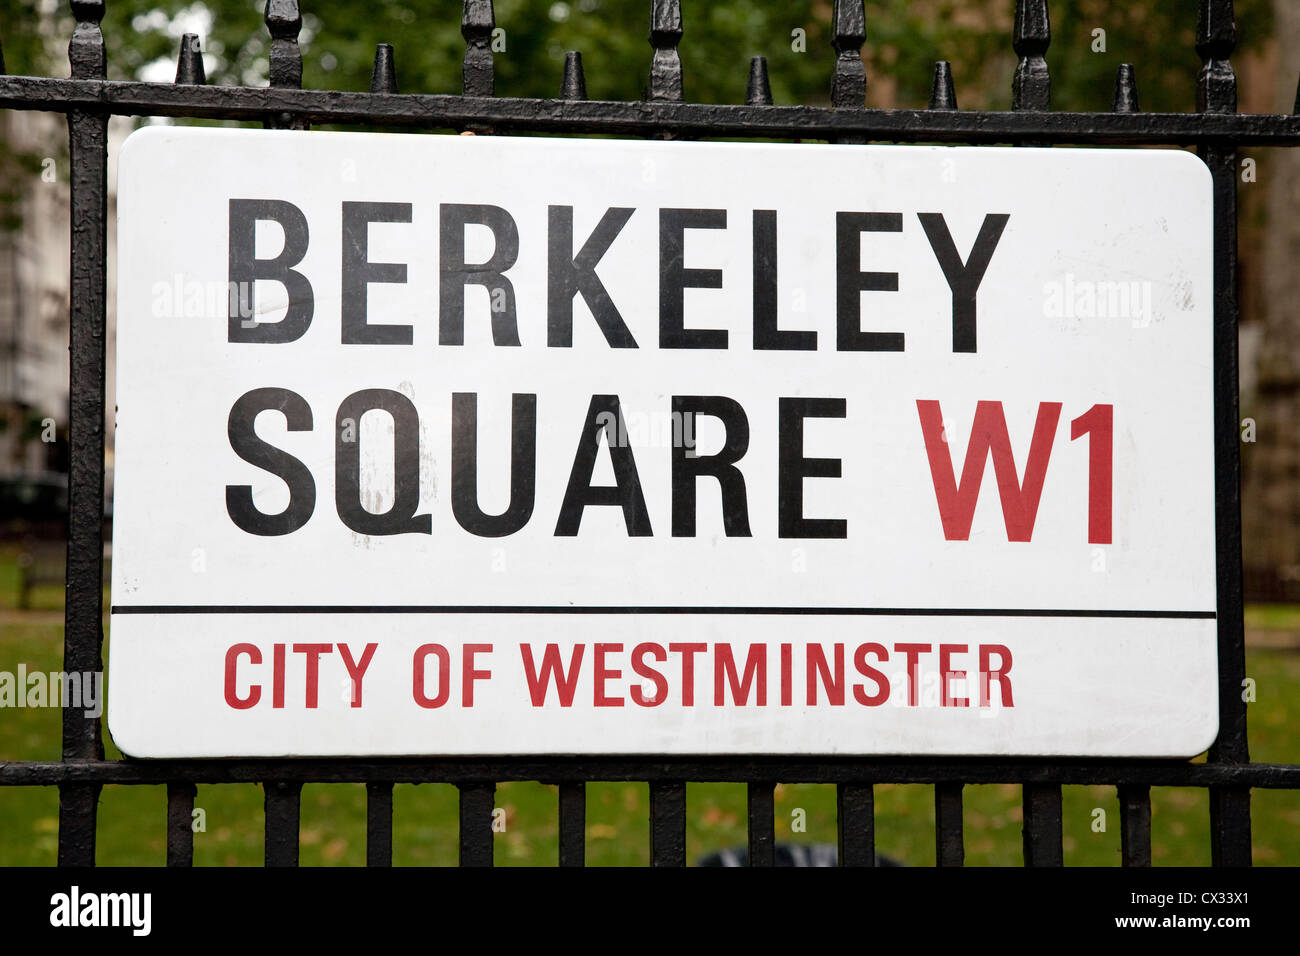 Berkeley Square strada segno, Westminster, London, England, Regno Unito Foto Stock